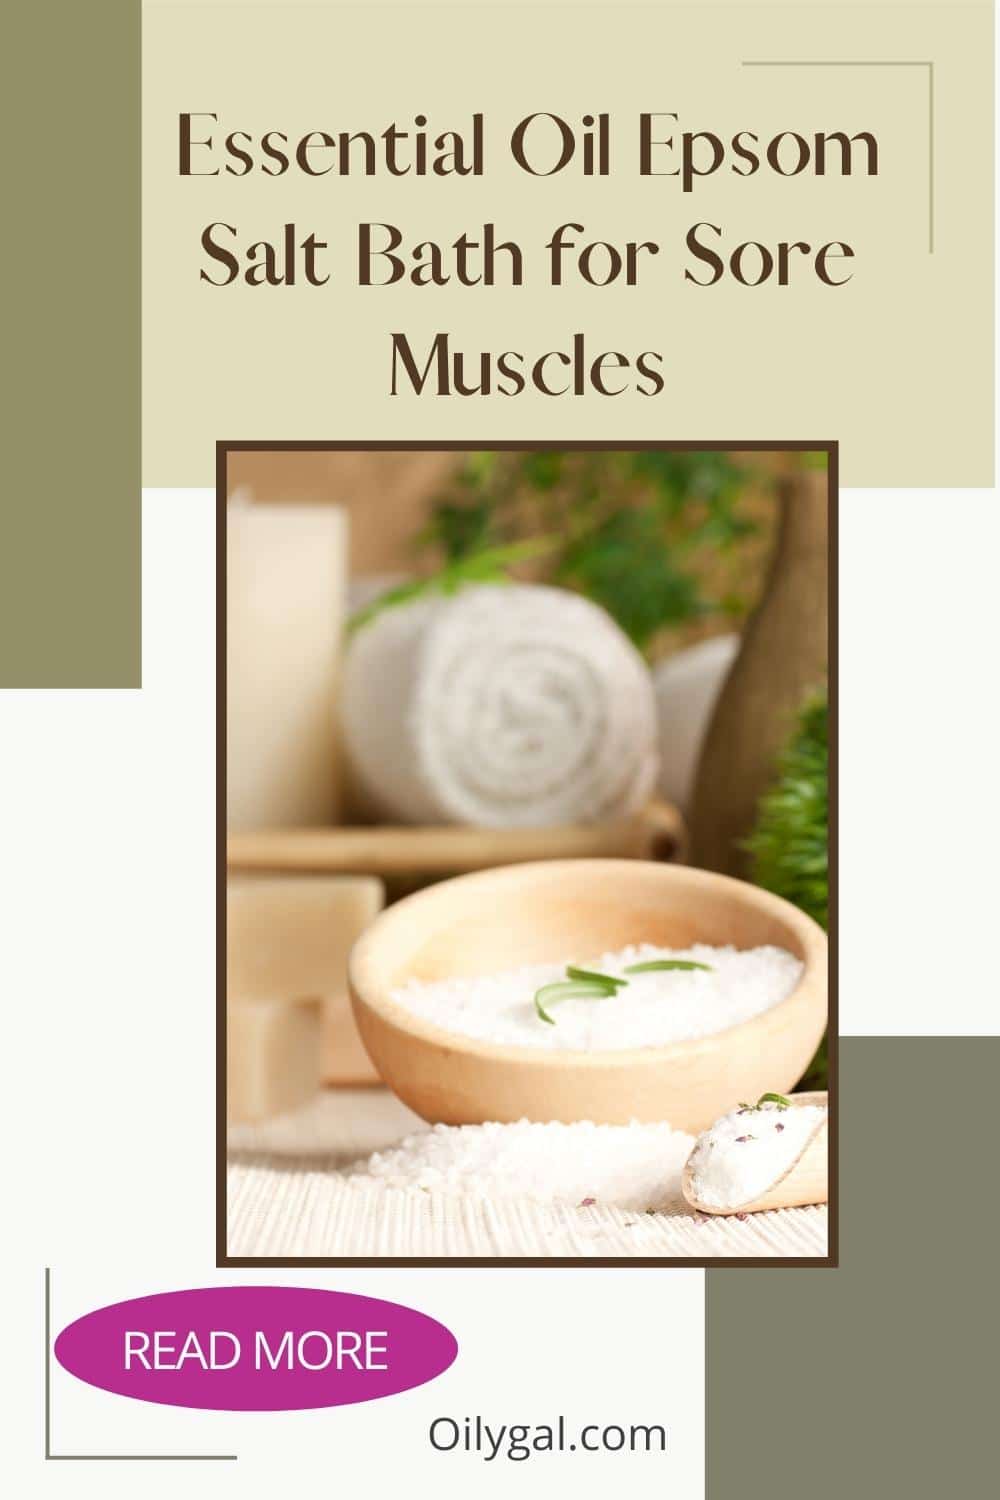 Essential Oil Epsom Salt Bath for Sore Muscles